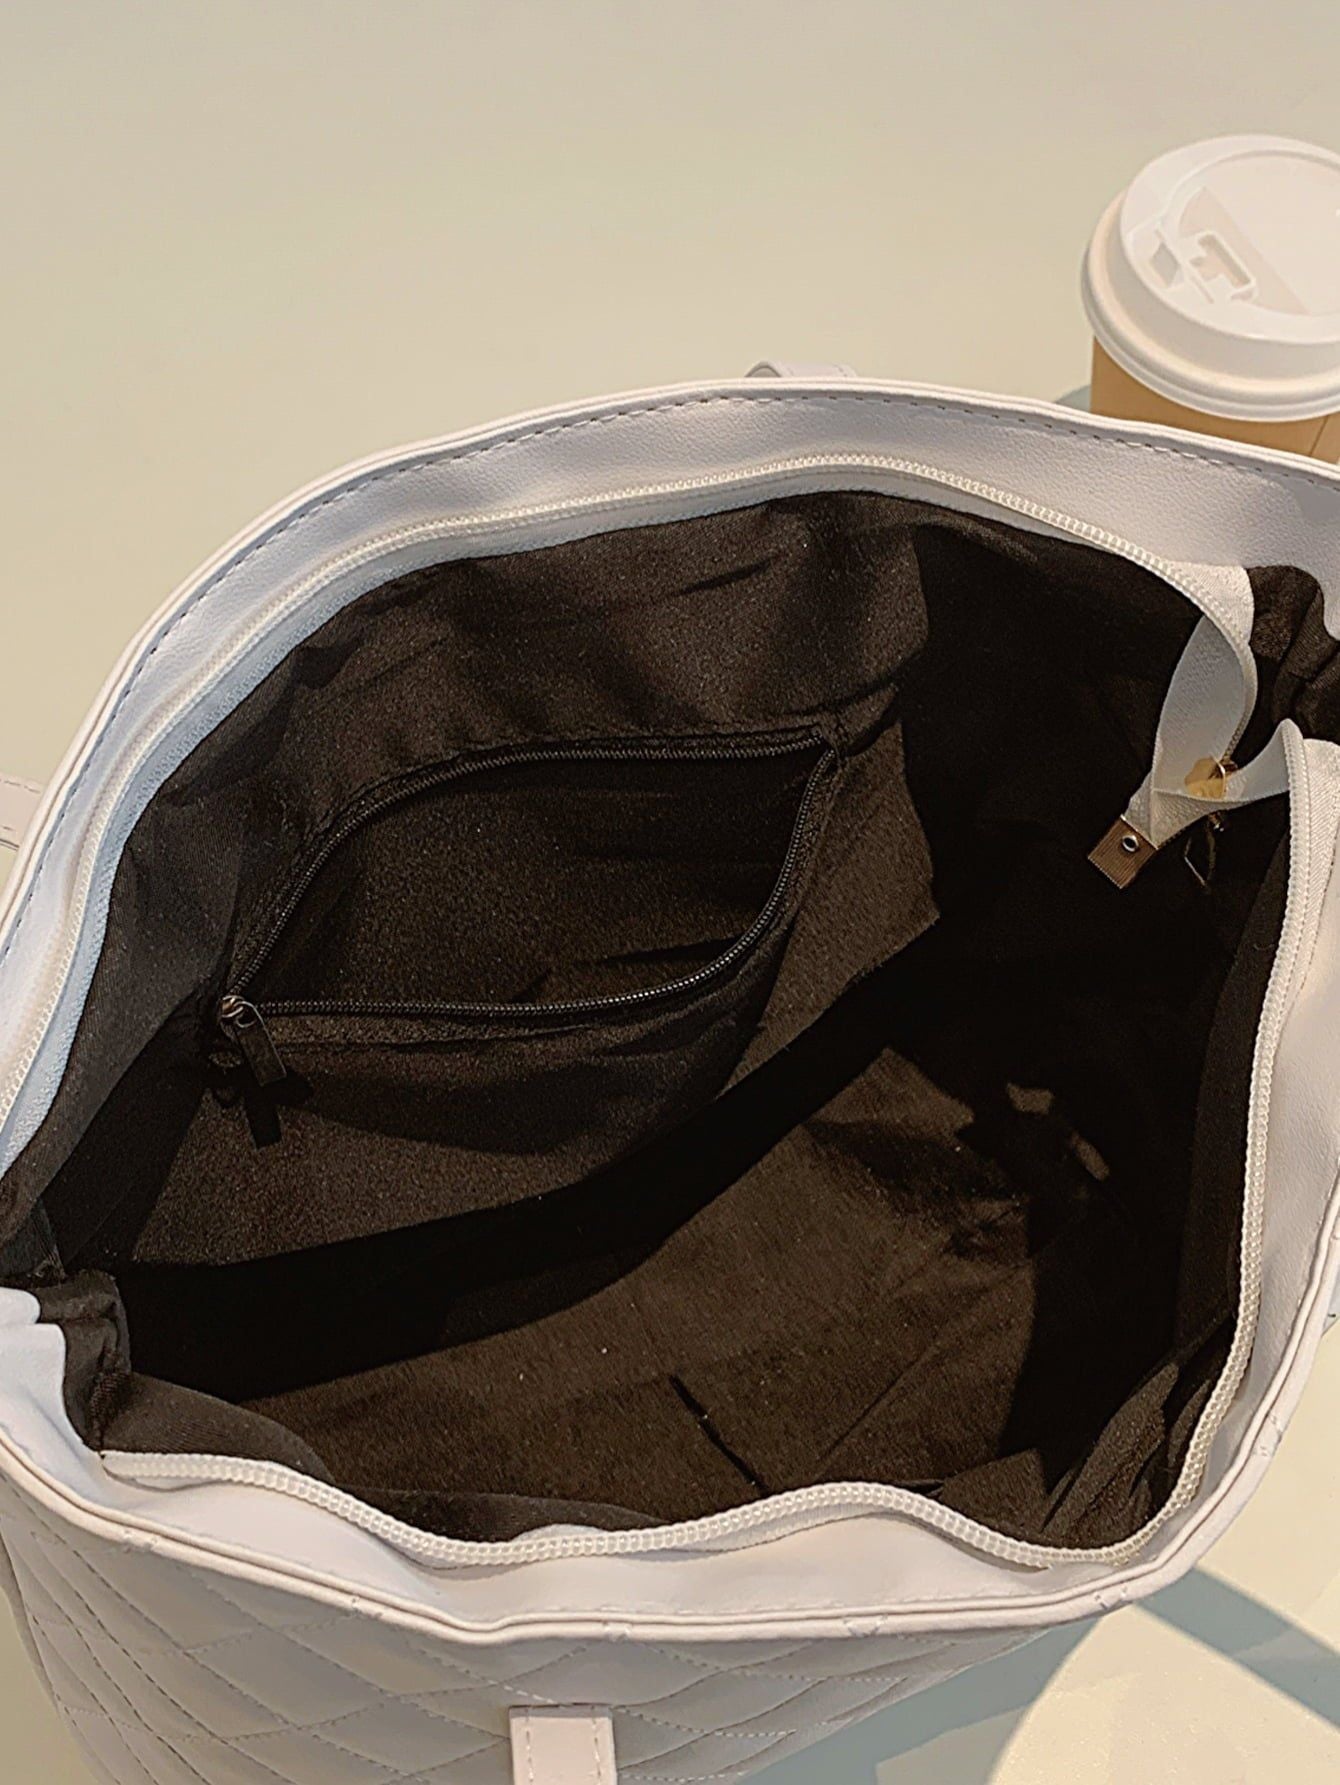 Baeful Three-Piece PU Leather Bag Set.